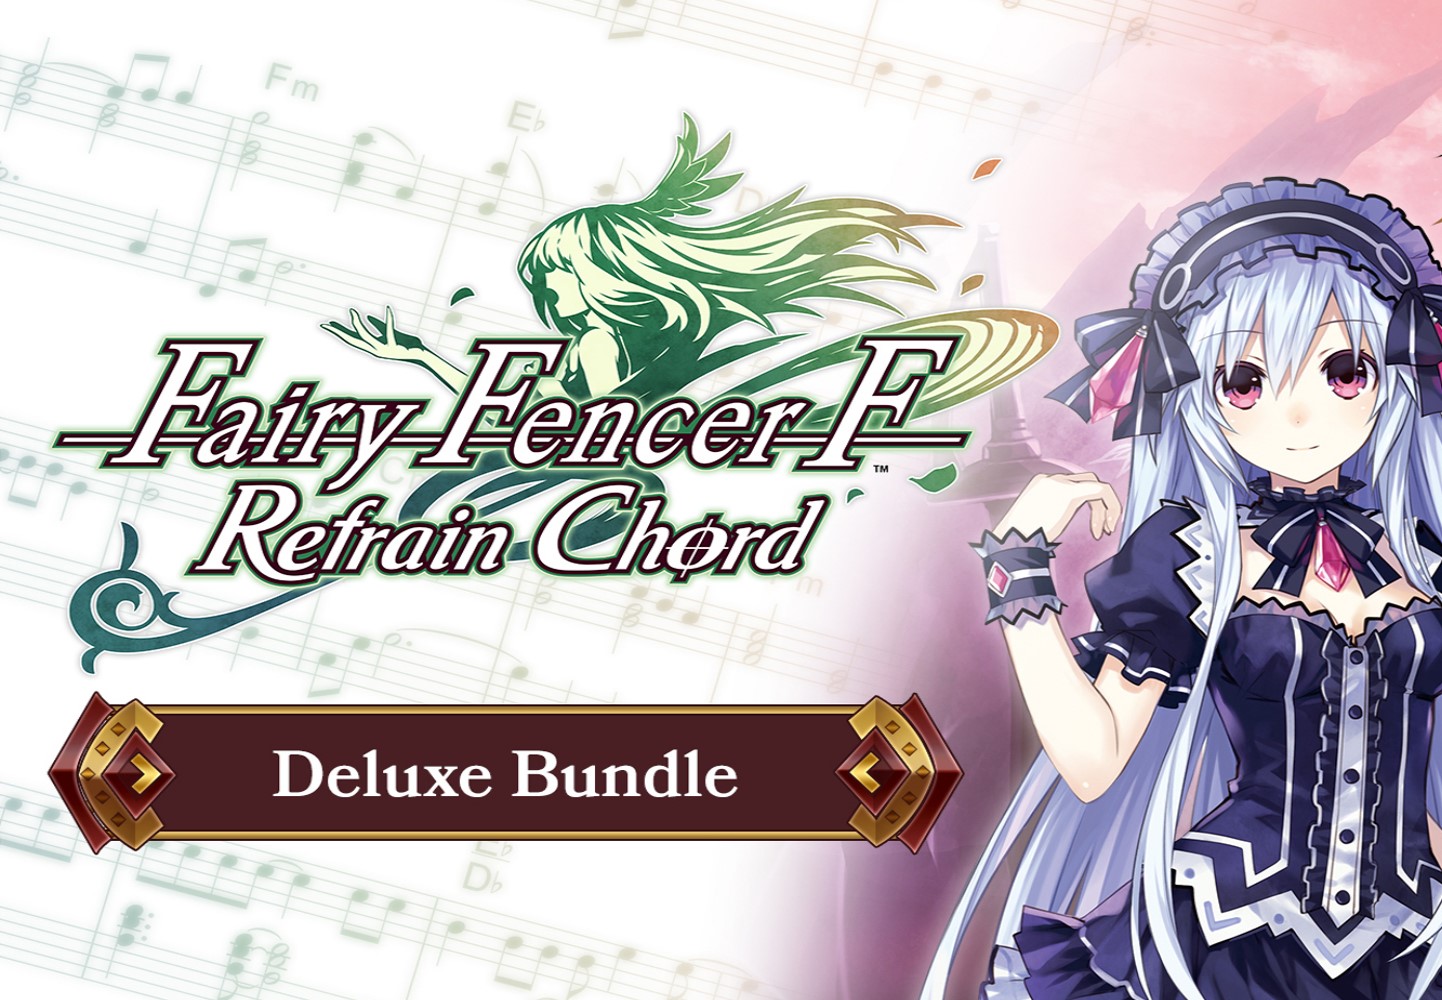 Fairy Fencer F: Refrain Chord - Deluxe Bundle DLC Pack EU PS5 CD Key